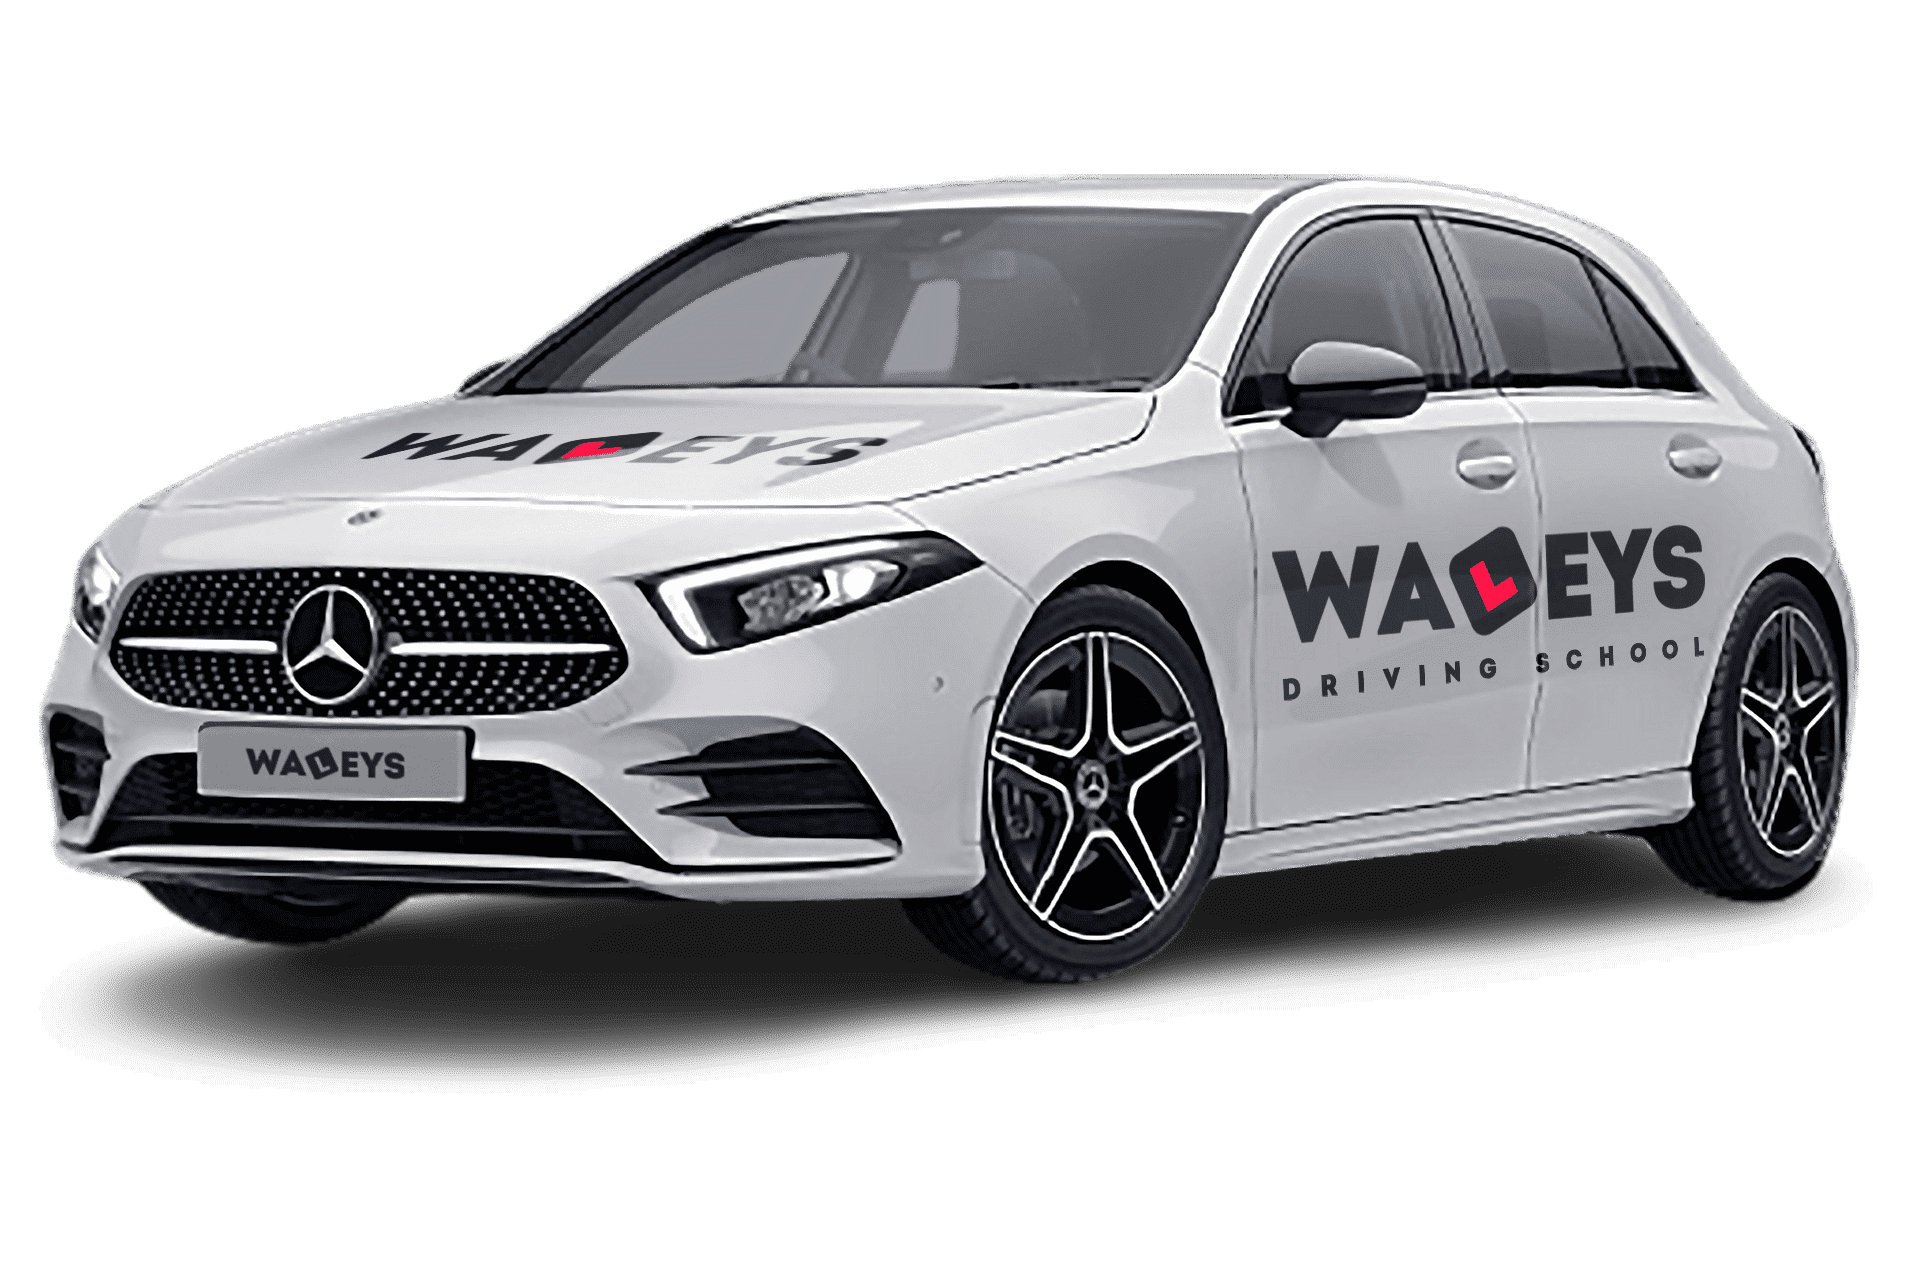 Waleys Driving School - A Class With Branding